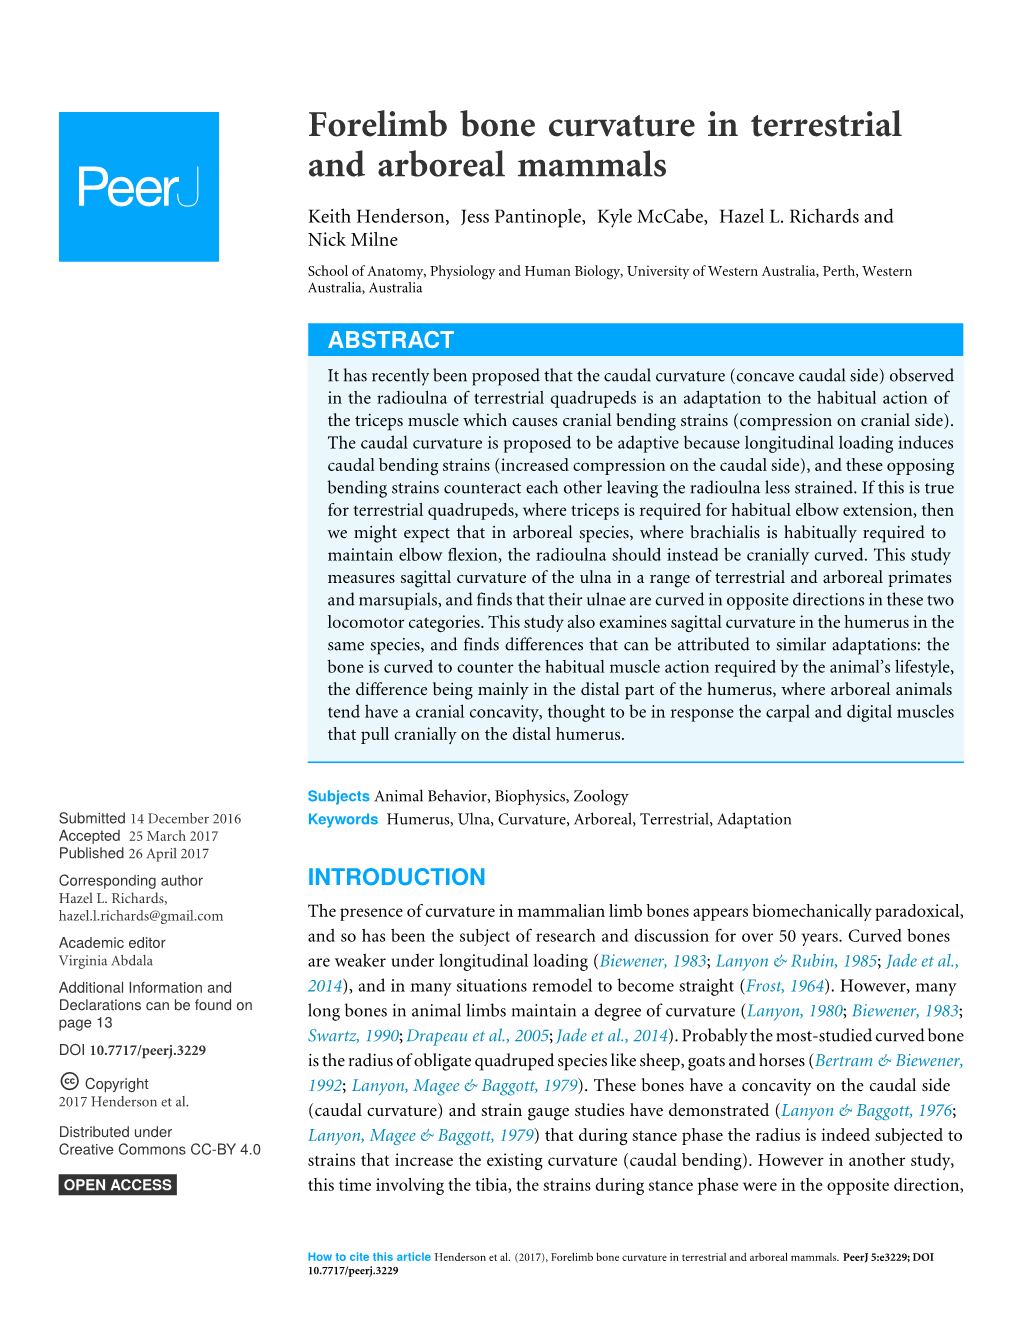 Forelimb Bone Curvature in Terrestrial and Arboreal Mammals